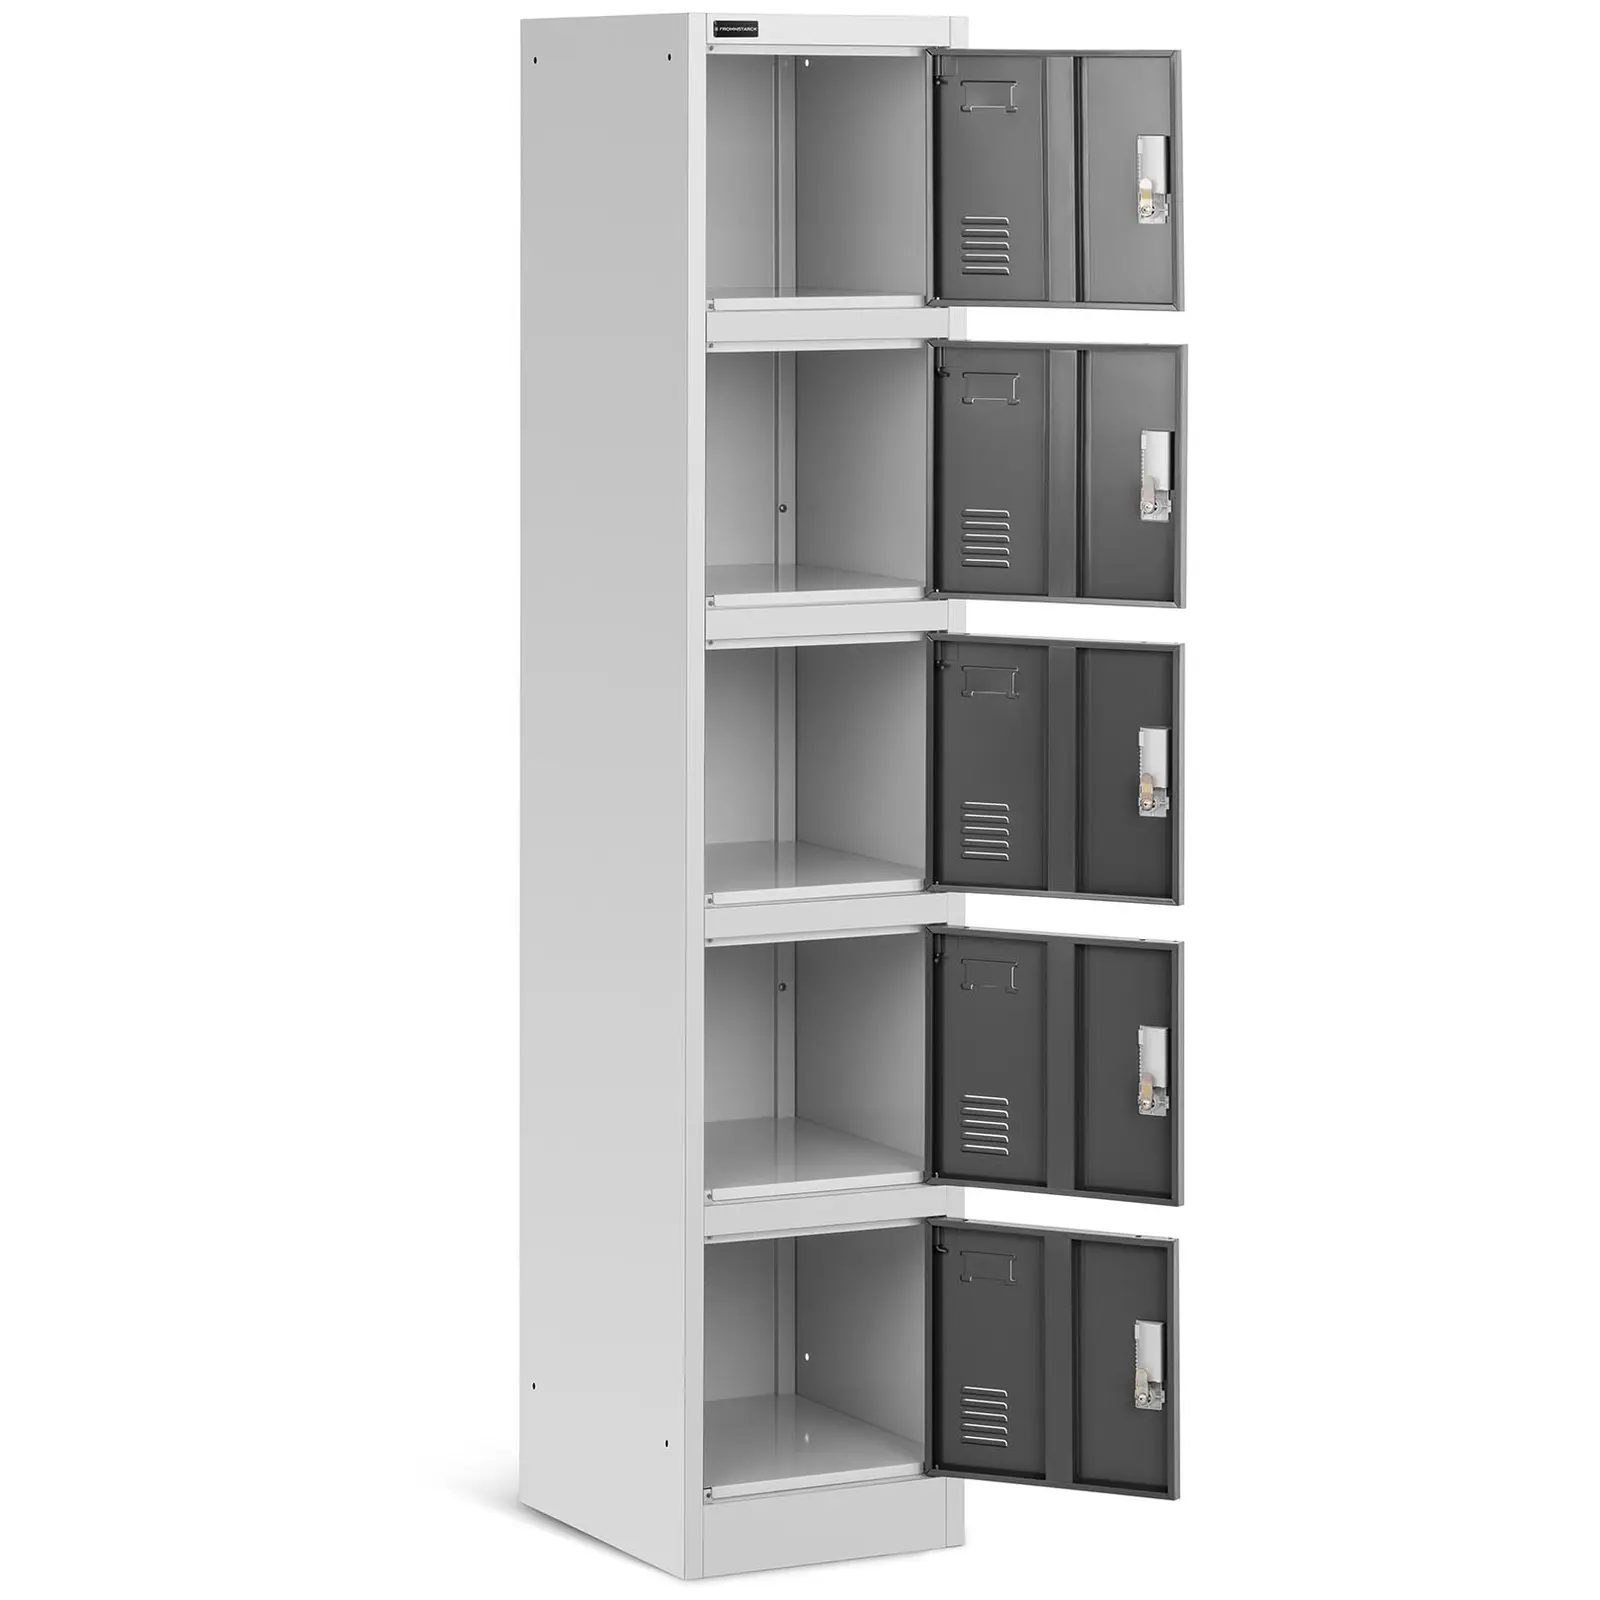 Metal Storage Locker - 5 compartments - grey